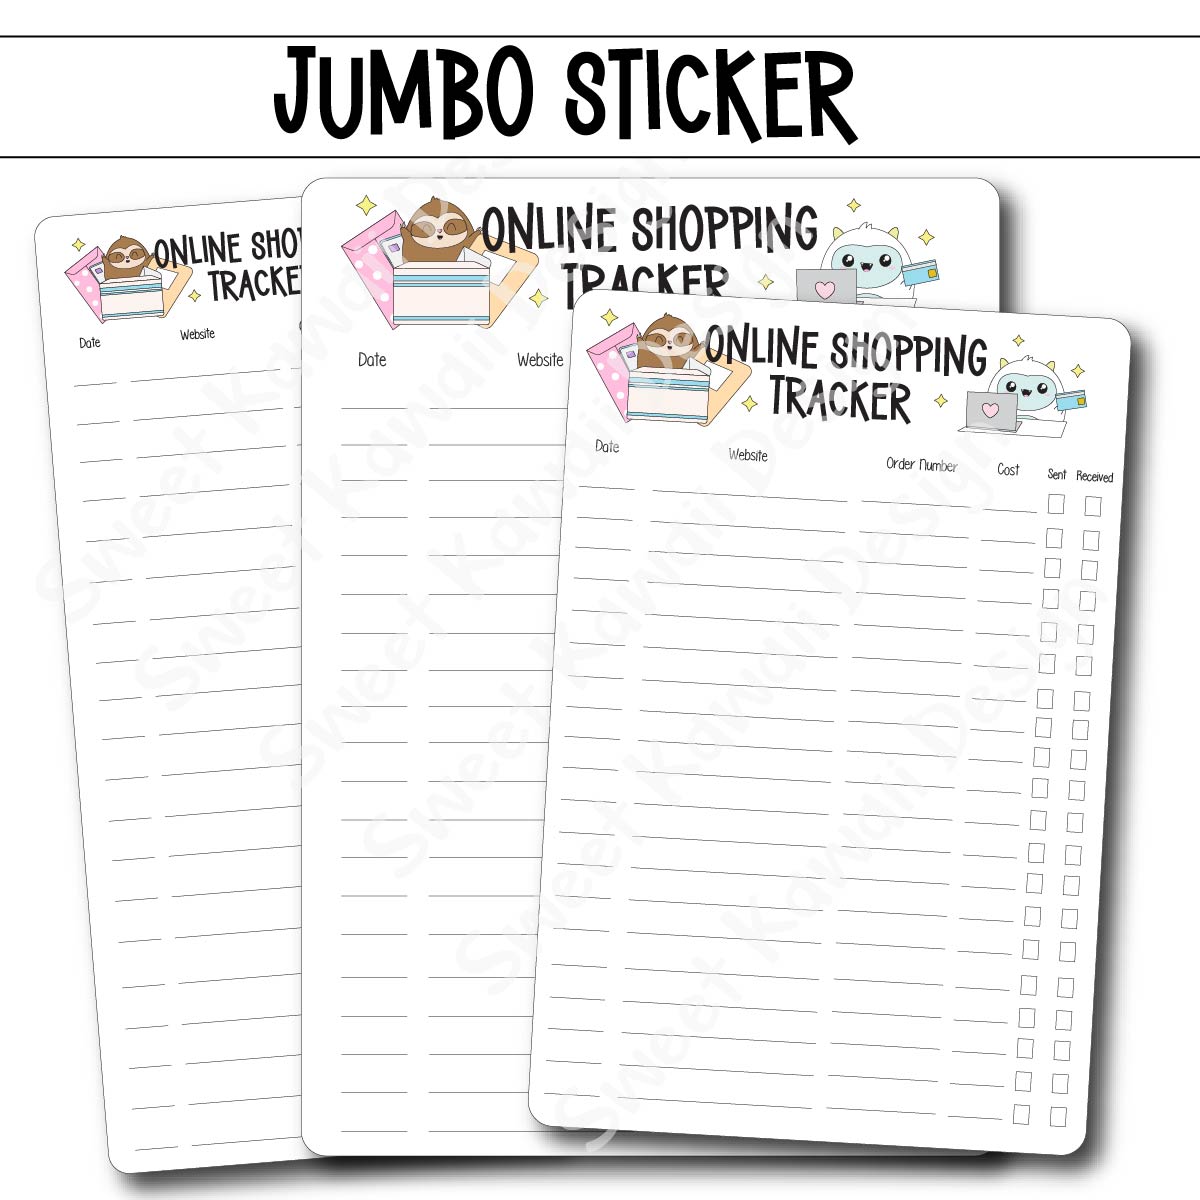 Kawaii Jumbo Sticker - Online Shopping Tracker - Size Options Available